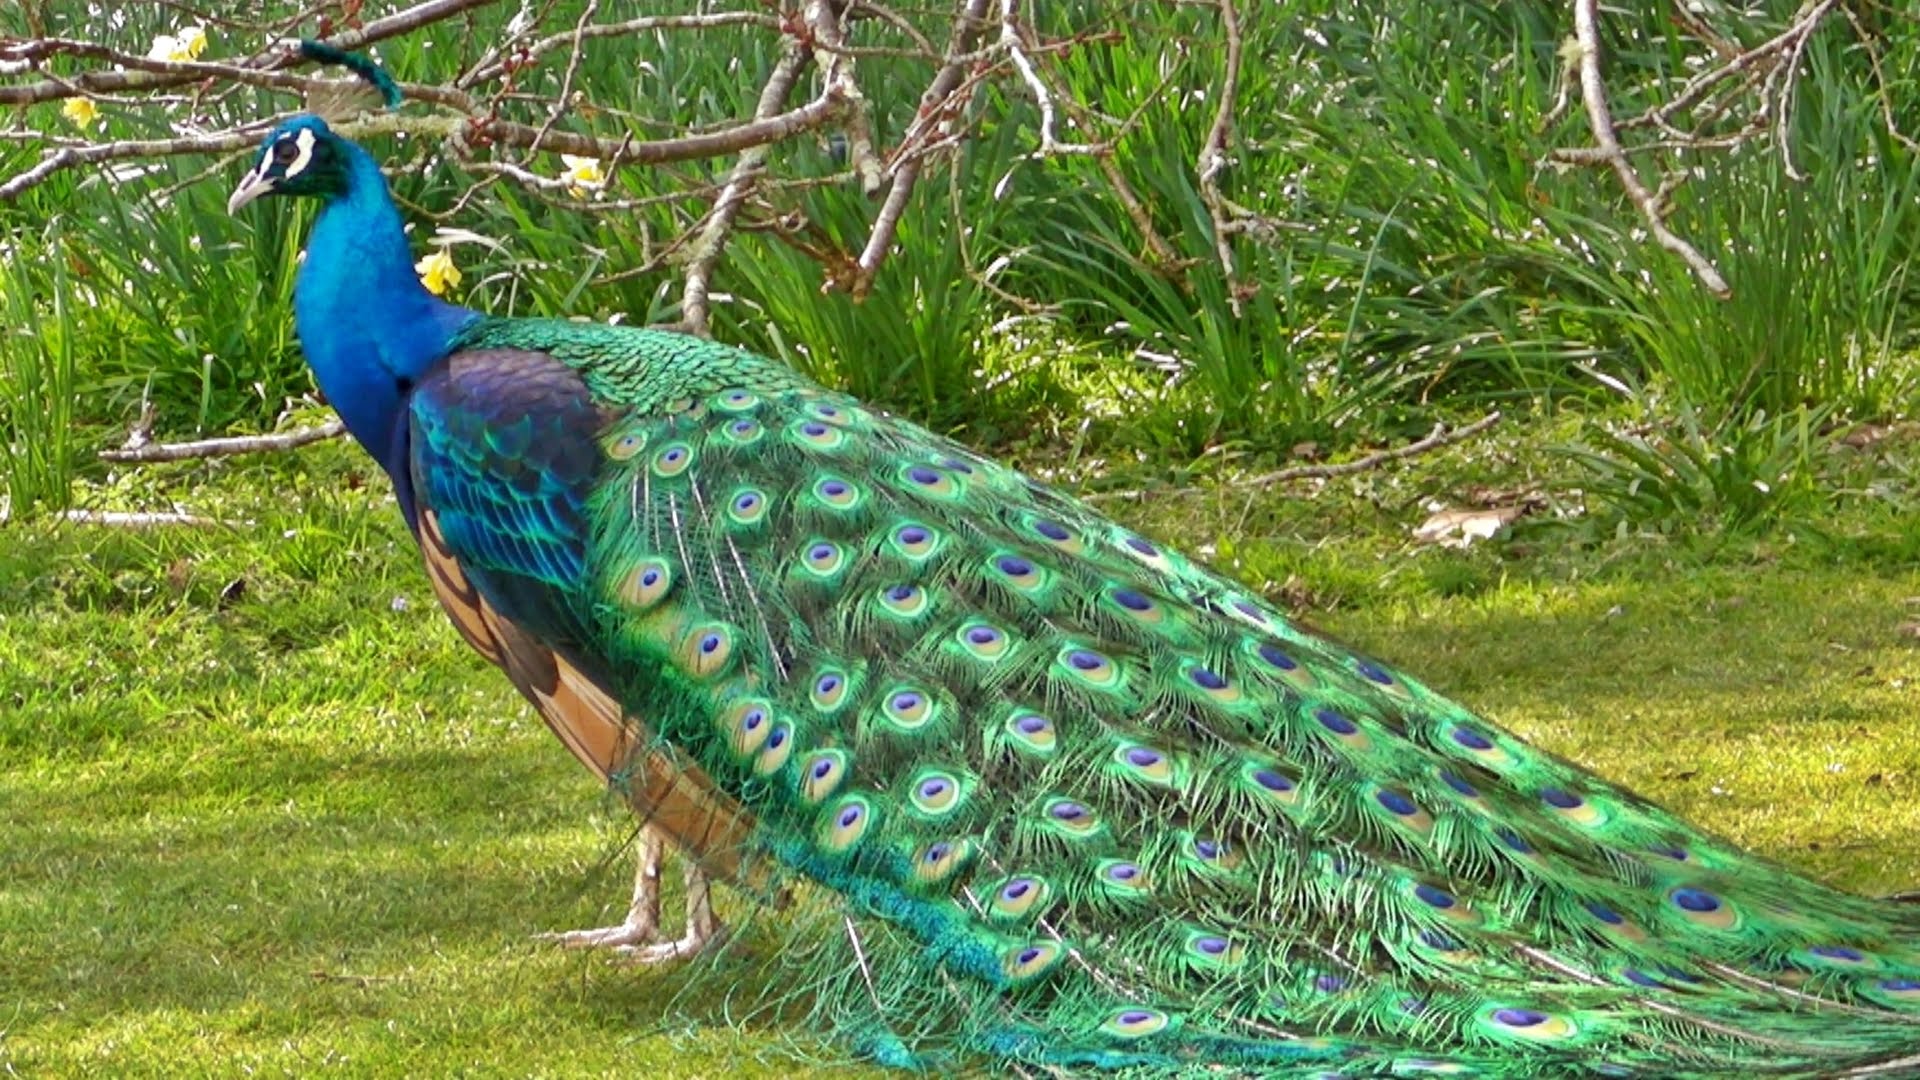 Peacock in All its Glory - मोर - الطاووس - YouTube